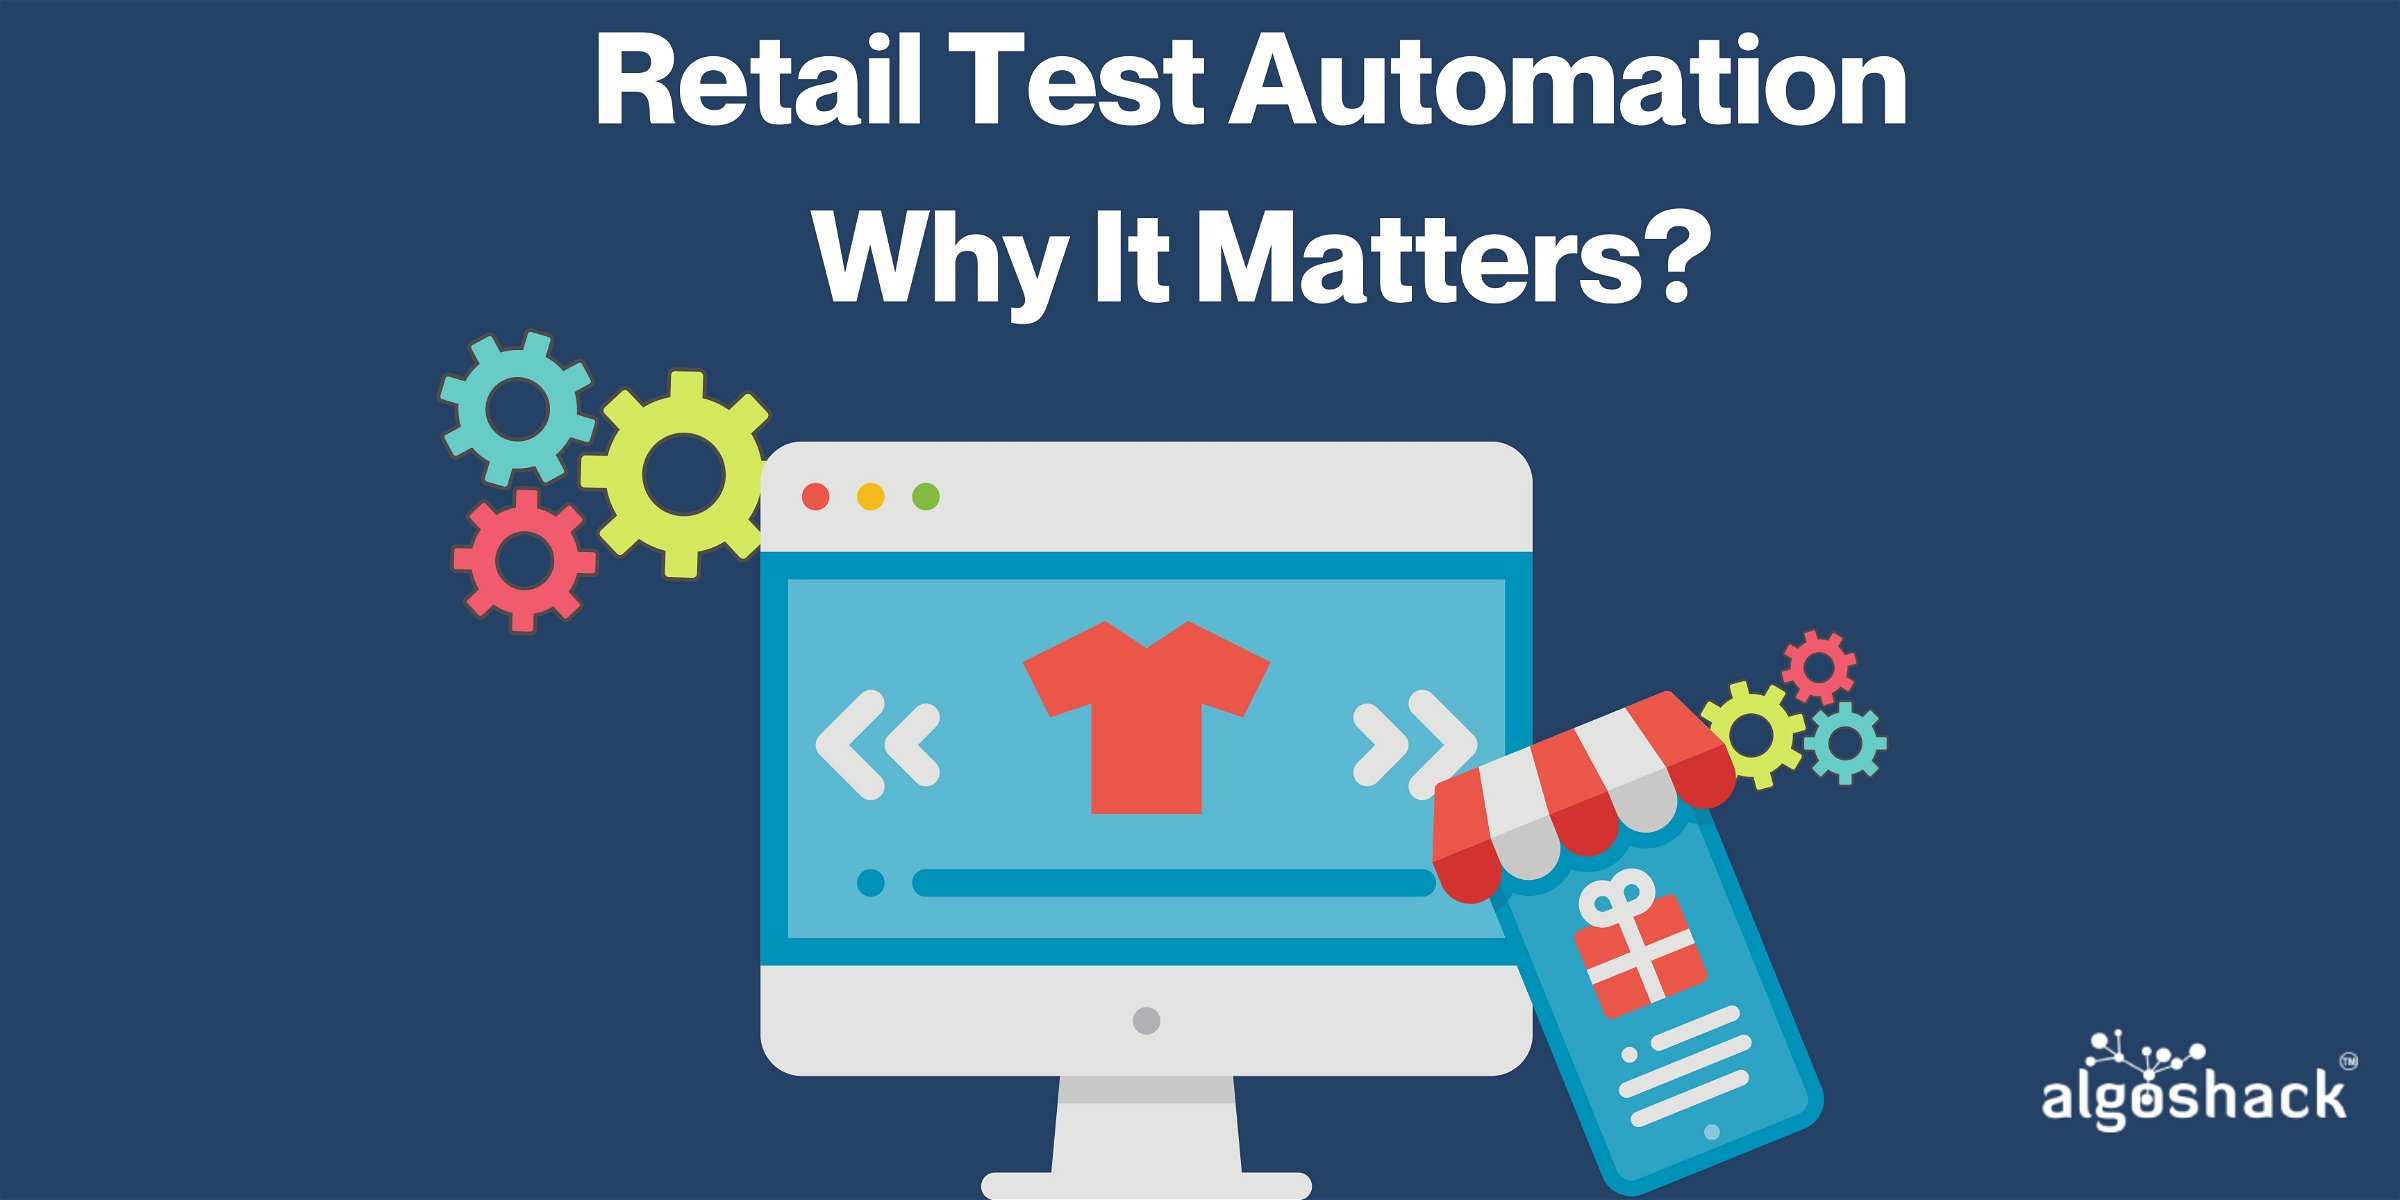 Retail test automation